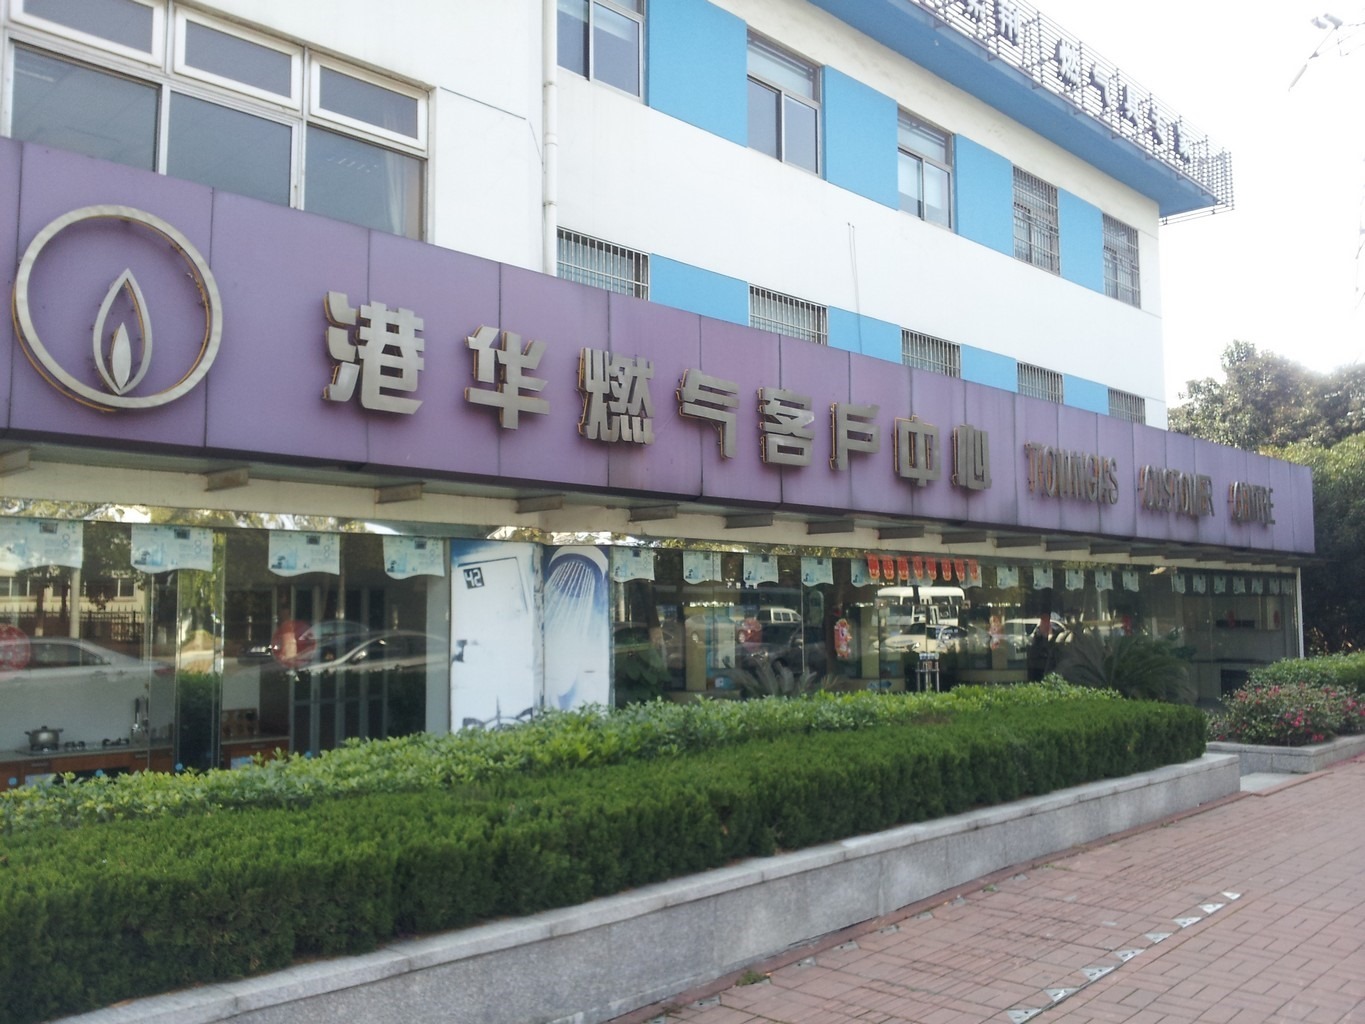 ganghua gas client center on jinji lake road